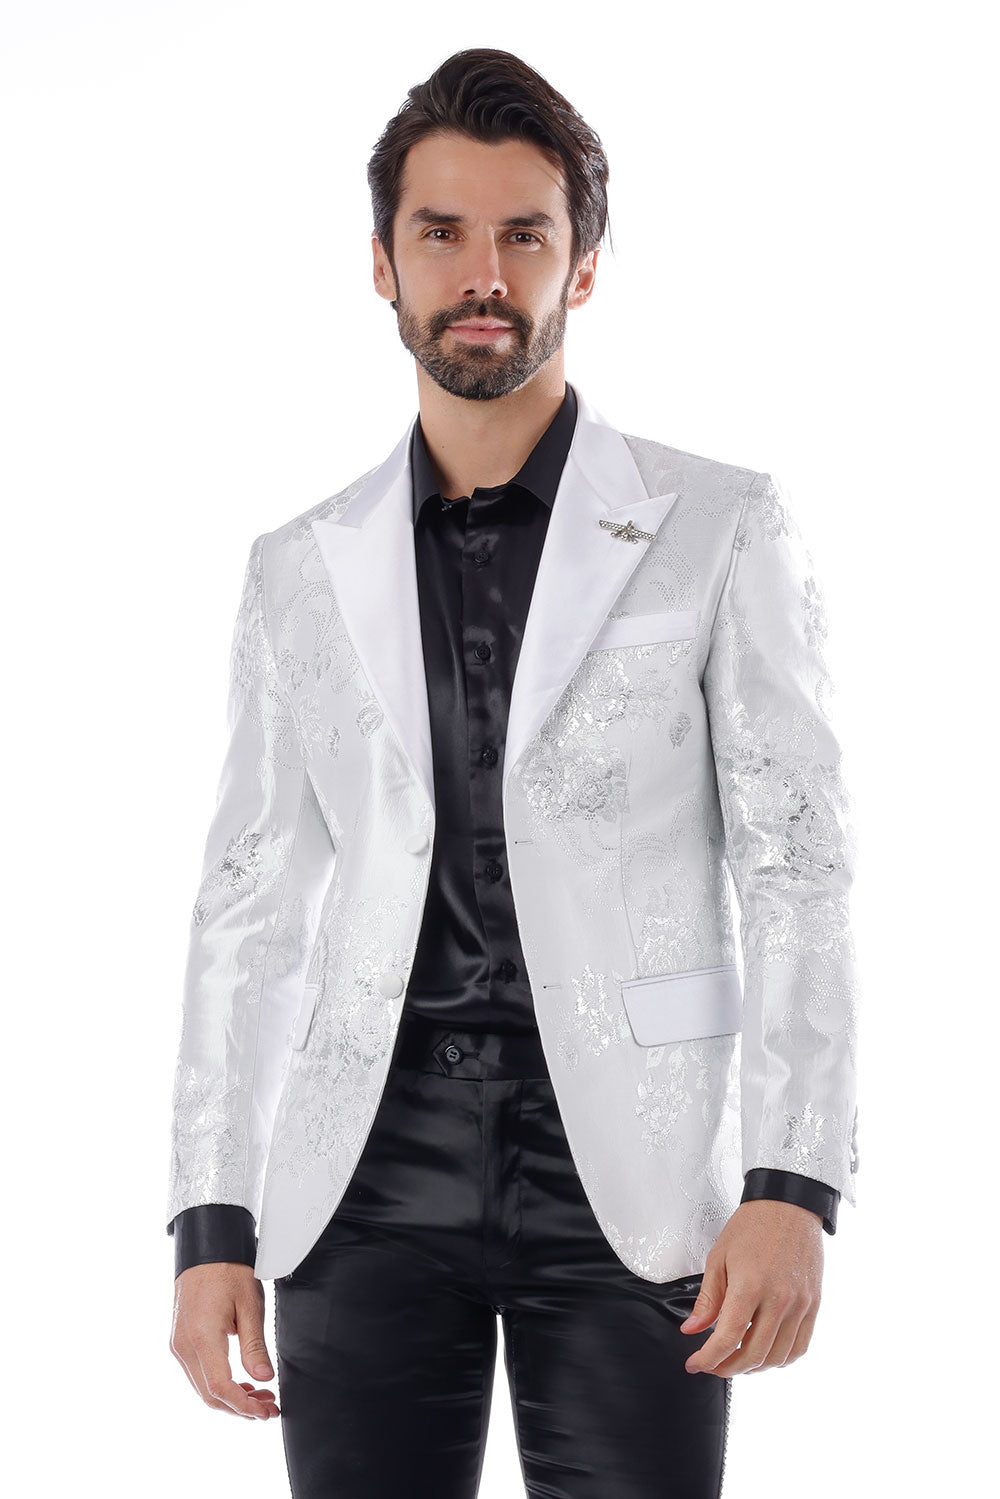 Barabas Men's Shiny Floral Pattern Long Sleeve Blazer 4BL25 White Silver